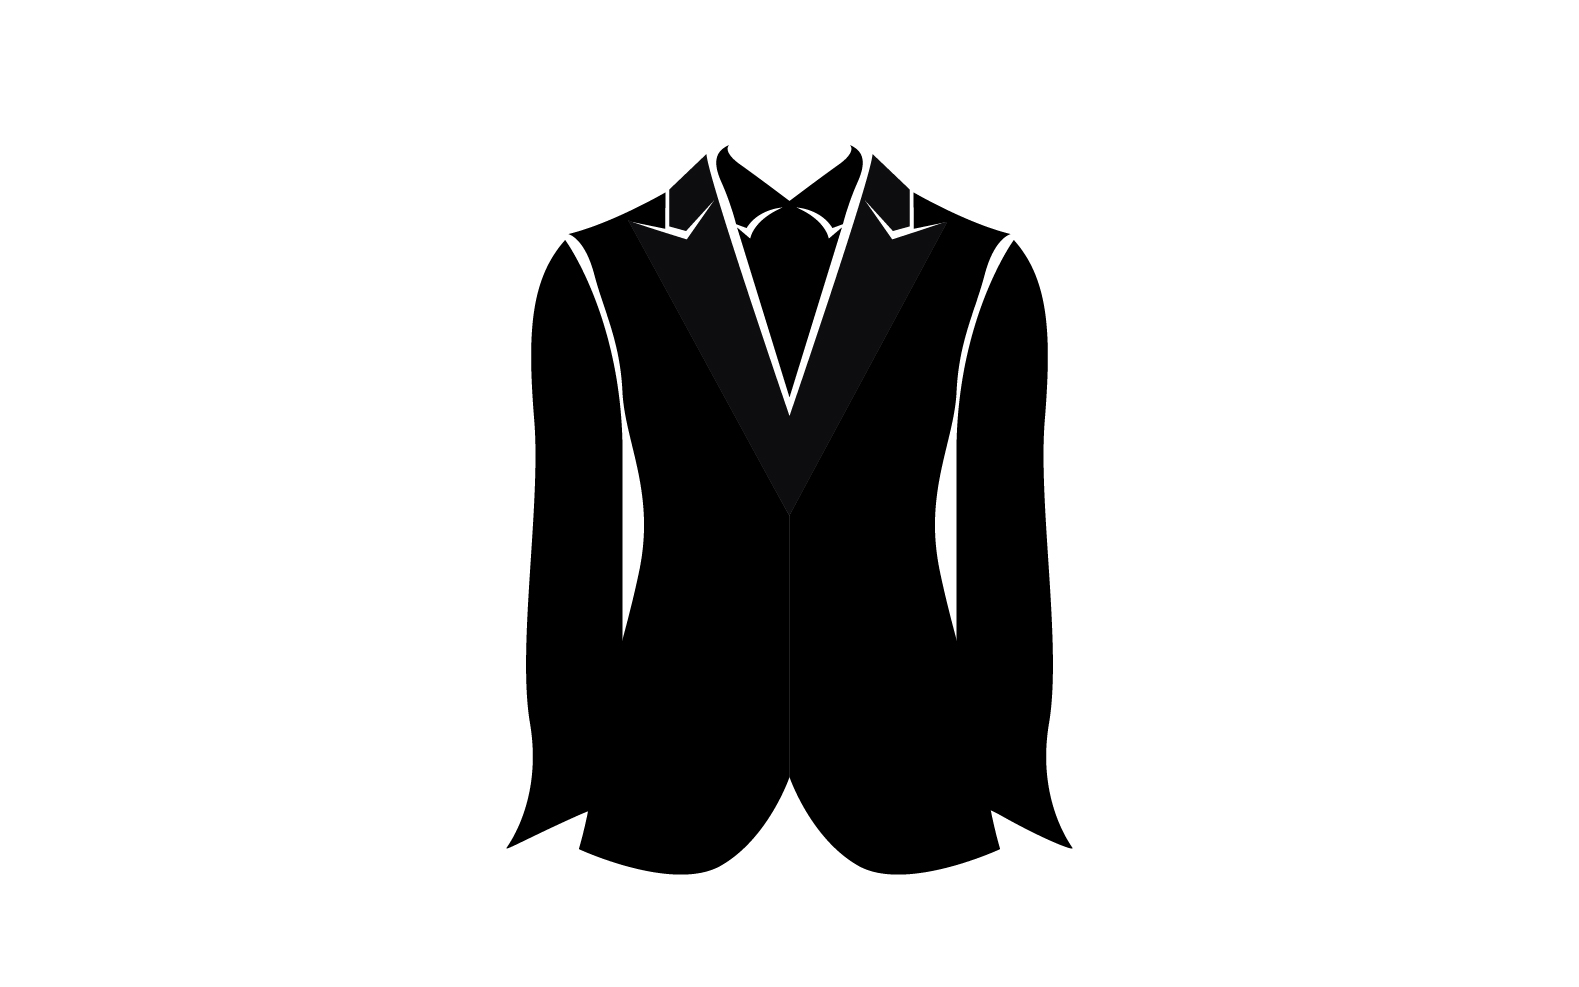 Maid suit logo and symbol vector design v6